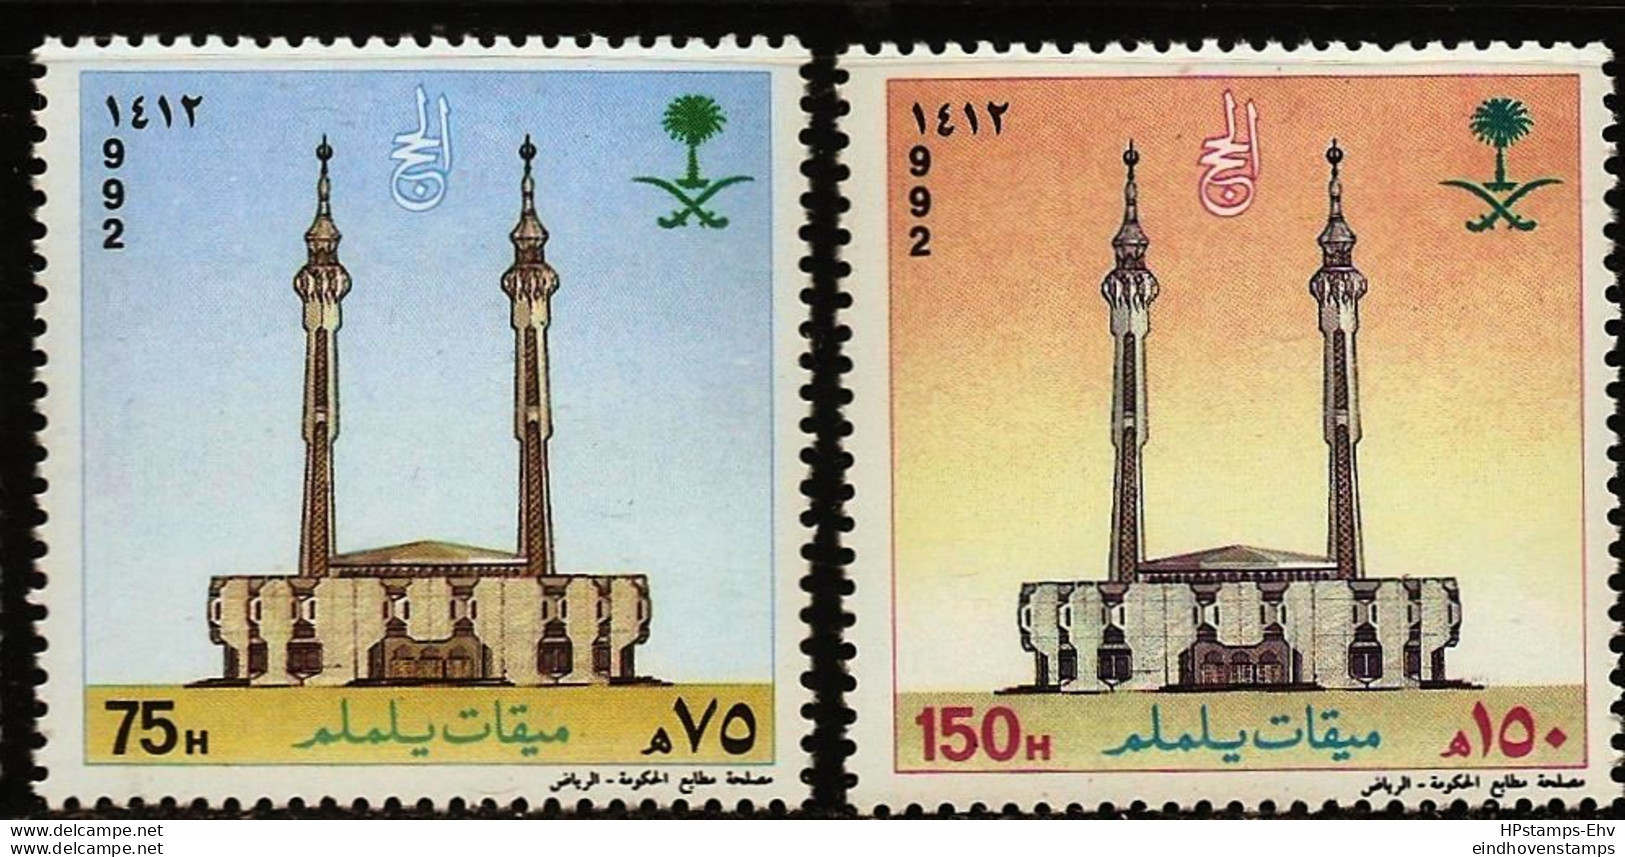 Saudi Arabia 1992 Pilgrimage To Mecca 2 Values MNH SA-92-06 Jalamlam Mosque - WHO